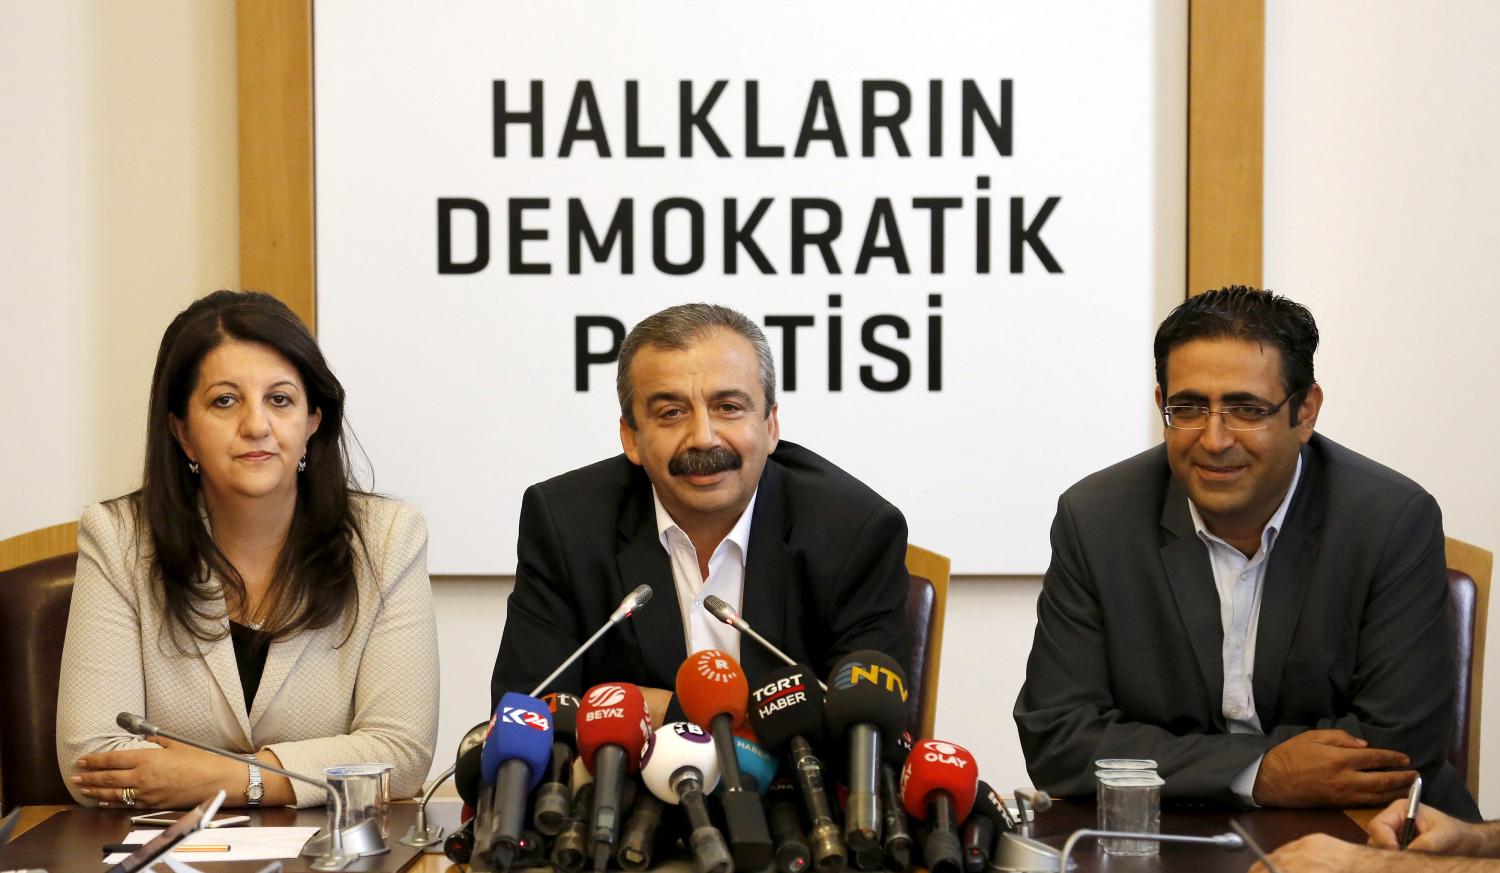 Pro-Kurdish politicians of Peoples' Democratic Party (HDP) Sirri Sureyya Onder (C), Pervin Buldan (L) and Idris Baluken attend a news conference in Ankara, Turkey, June 12, 2015. REUTERS/Umit Bektas/File Photo